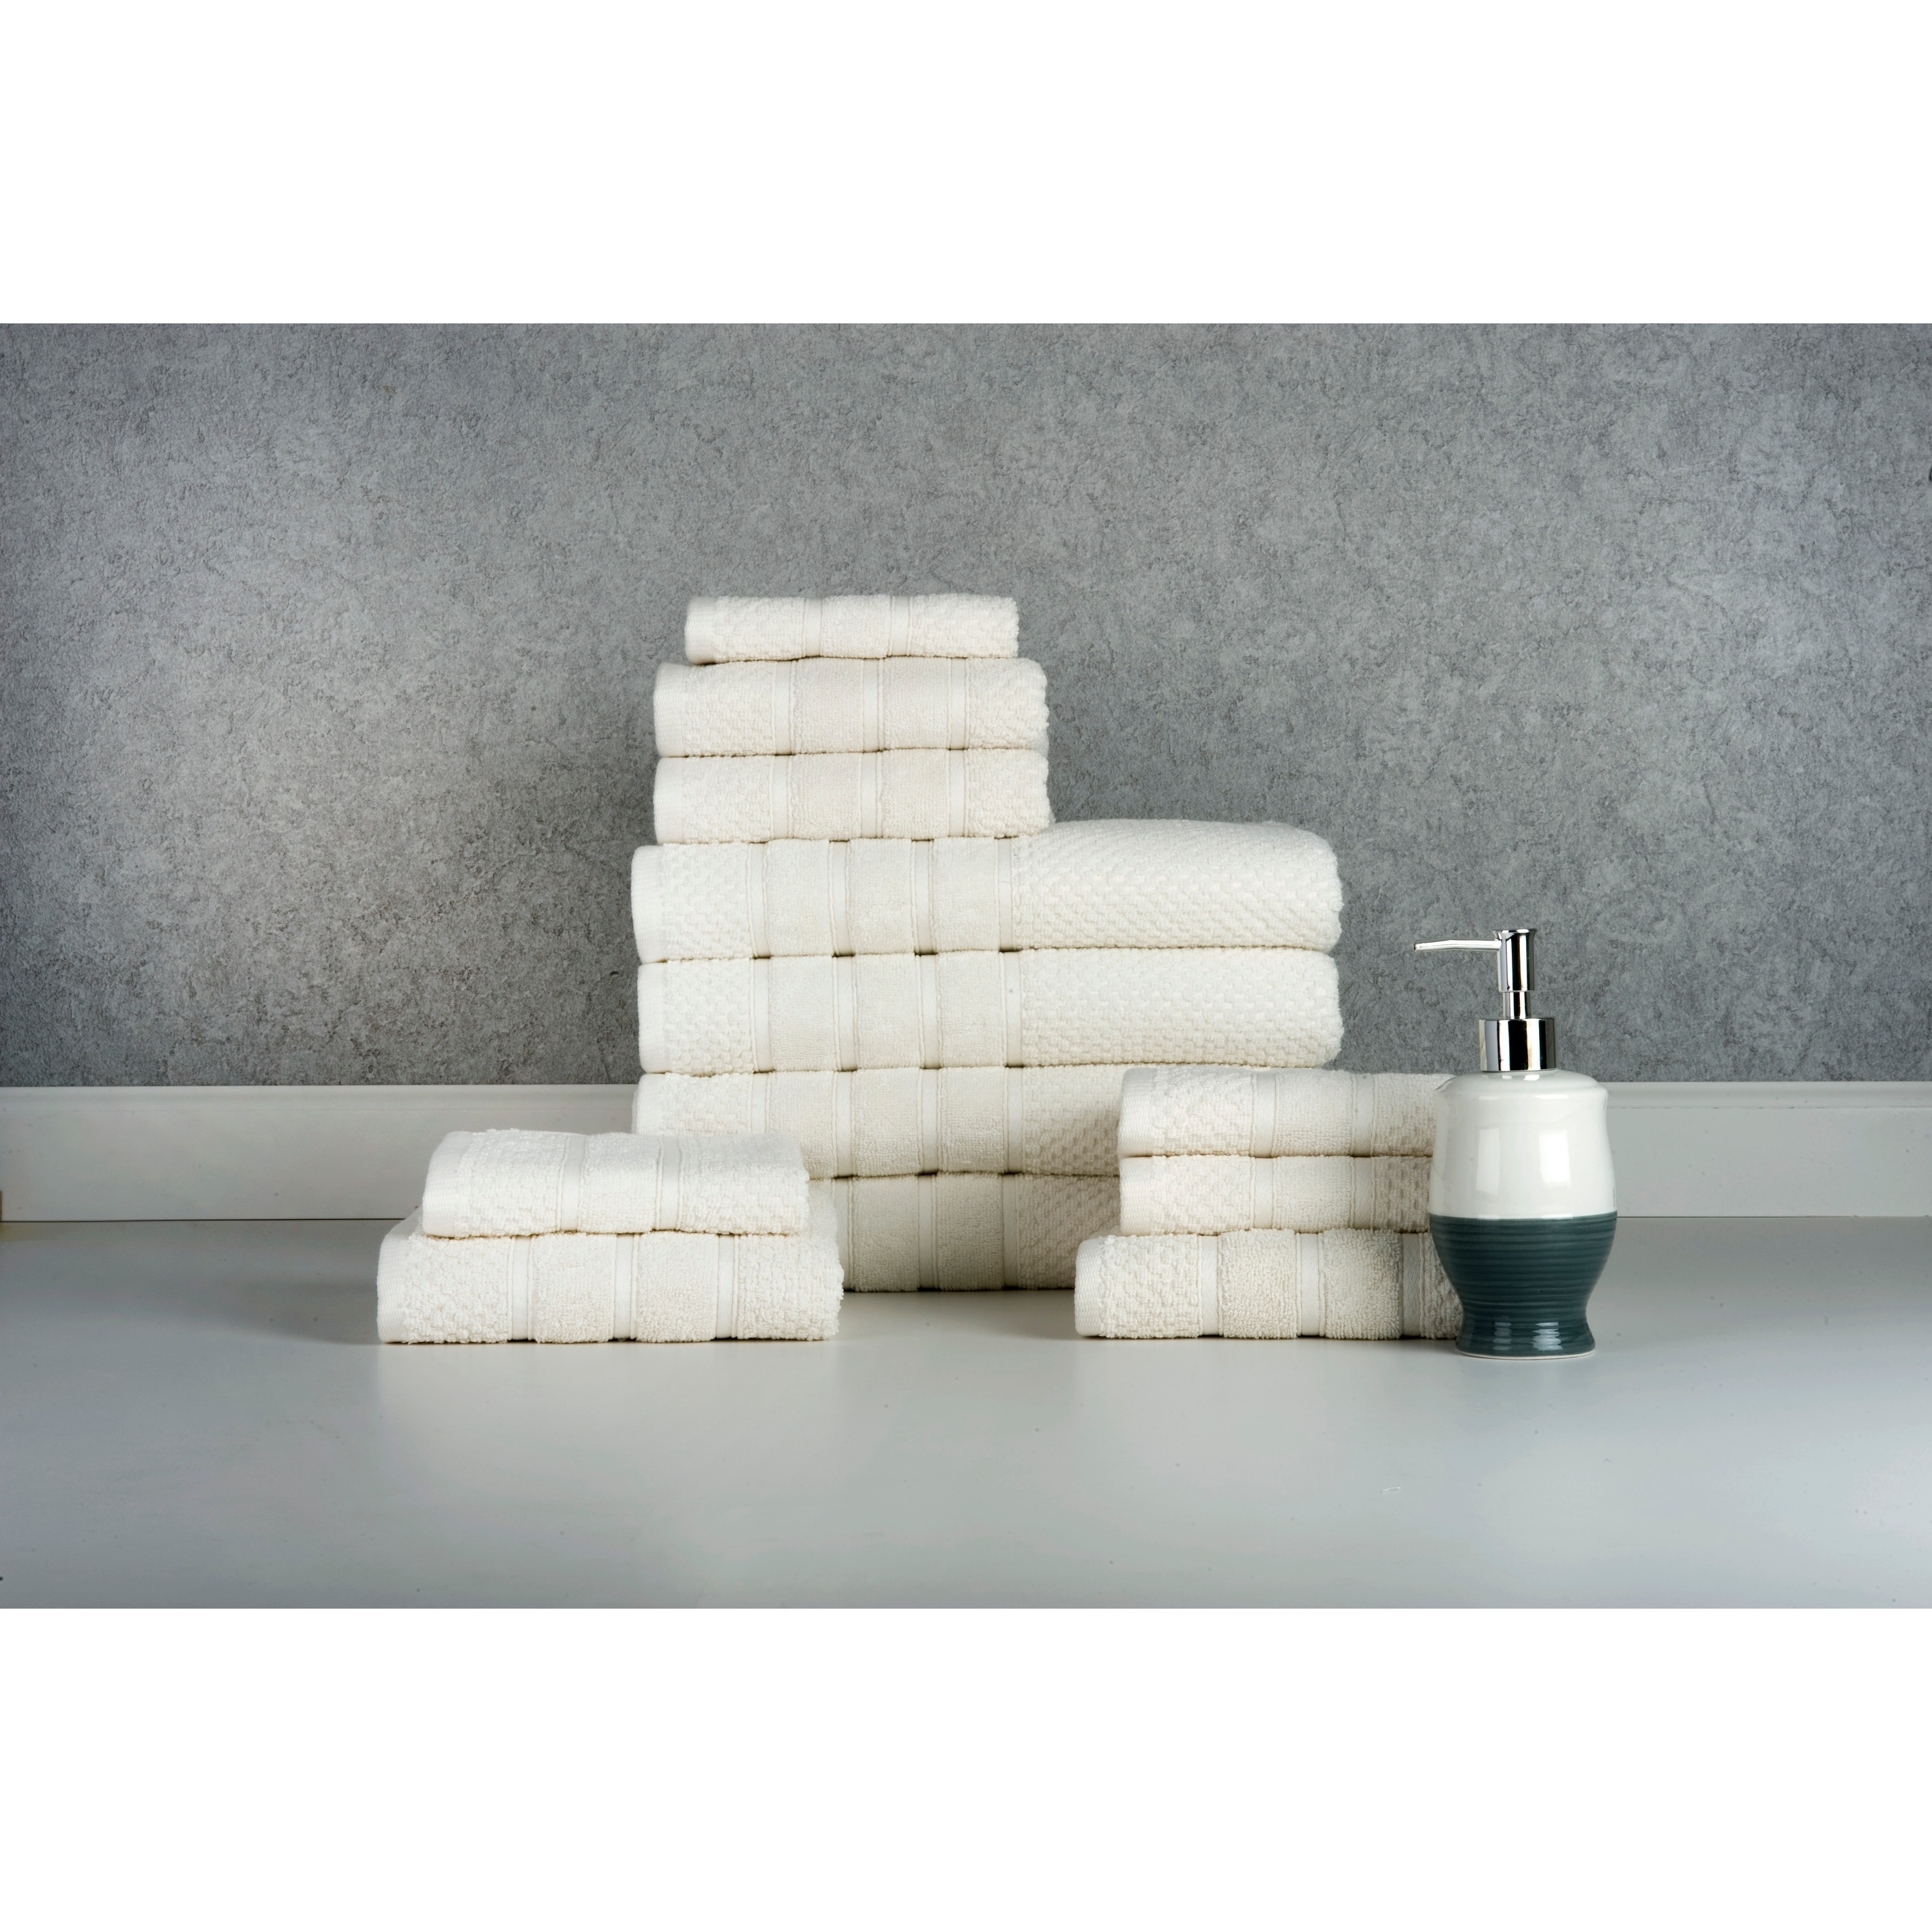 https://ak1.ostkcdn.com/images/products/is/images/direct/b9214235994b88a070984253f94a9f0d93825d90/Bibb-Home-12-Piece-Egyptian-Cotton-Towel-Set.jpg